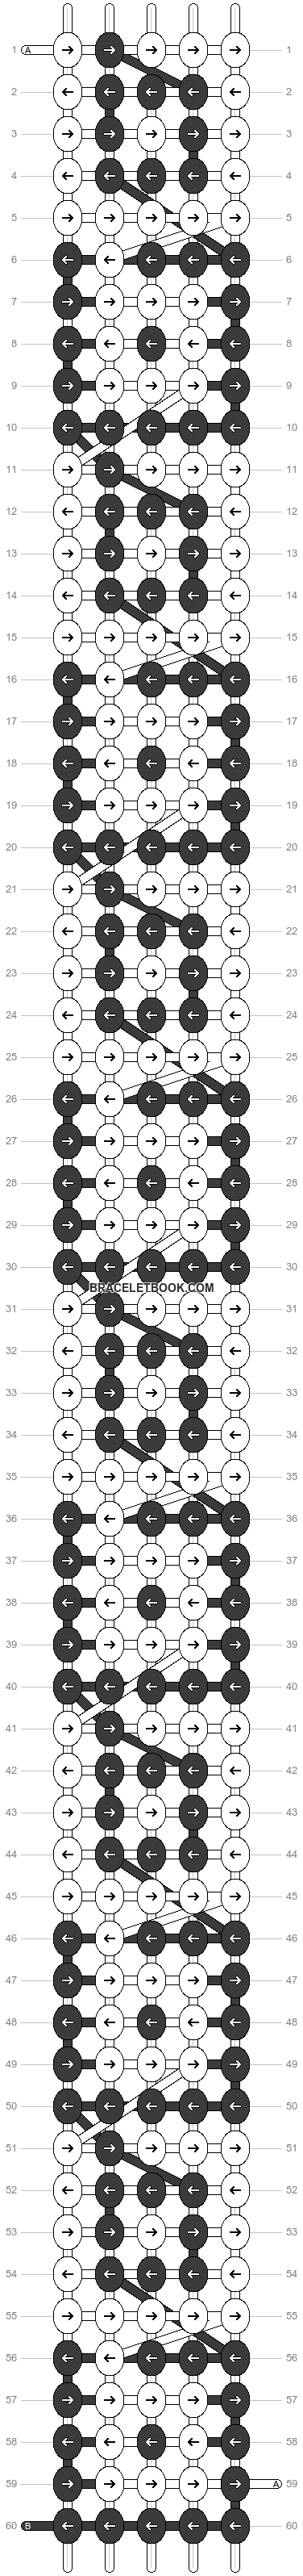 Alpha pattern #44556 variation #65848 pattern